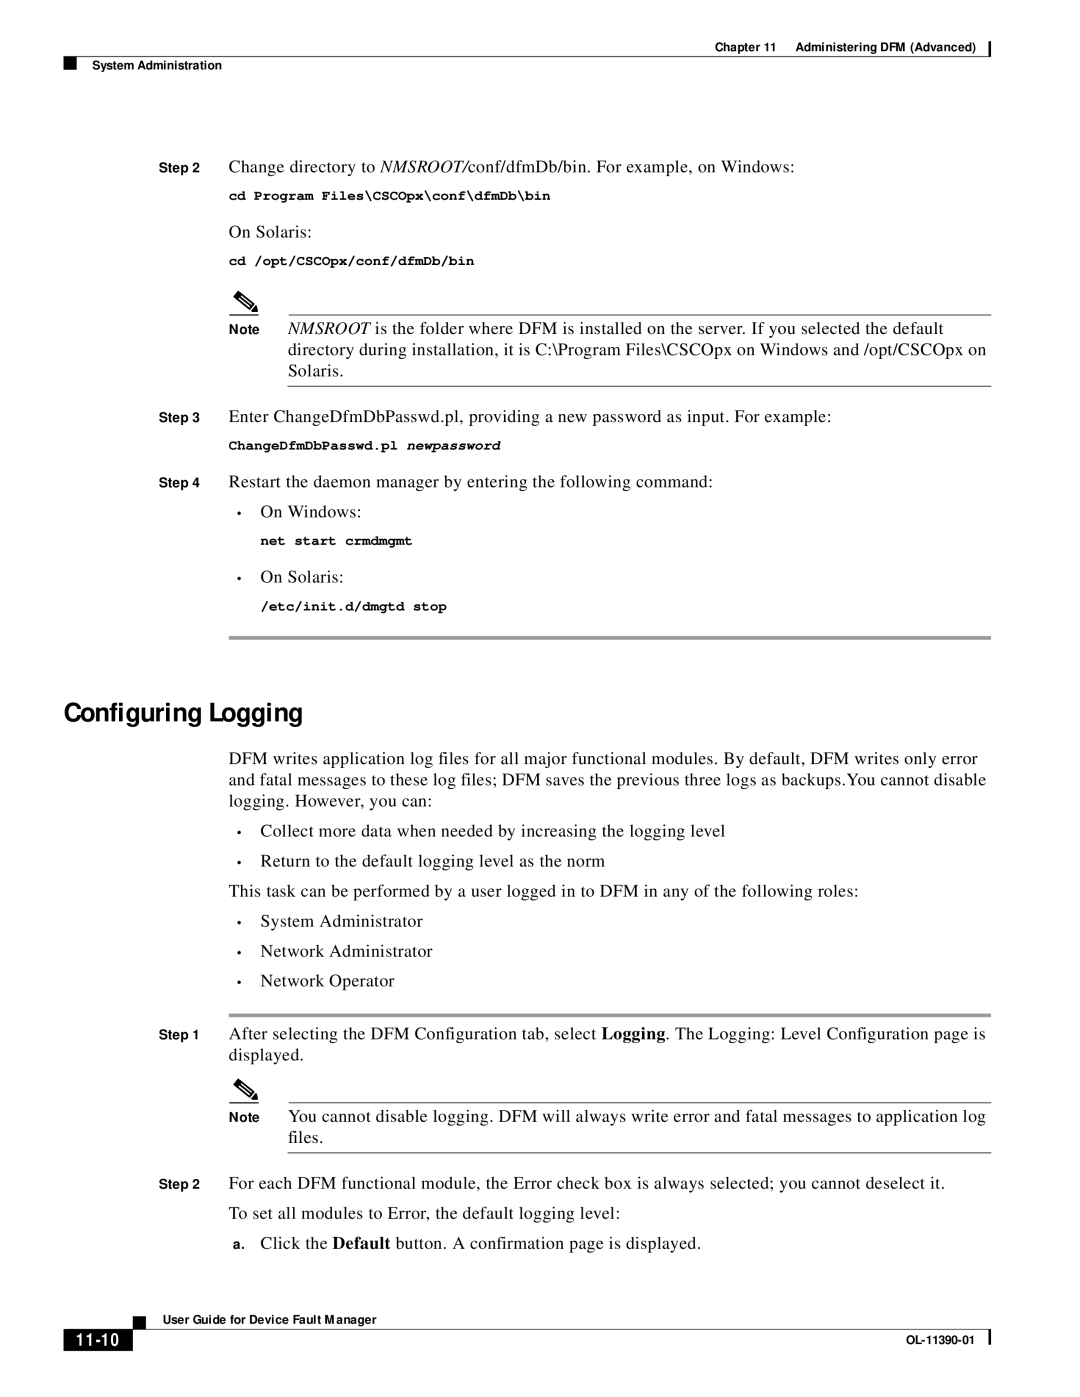 Cisco Systems OL-11390-01 manual Configuring Logging, 11-10 